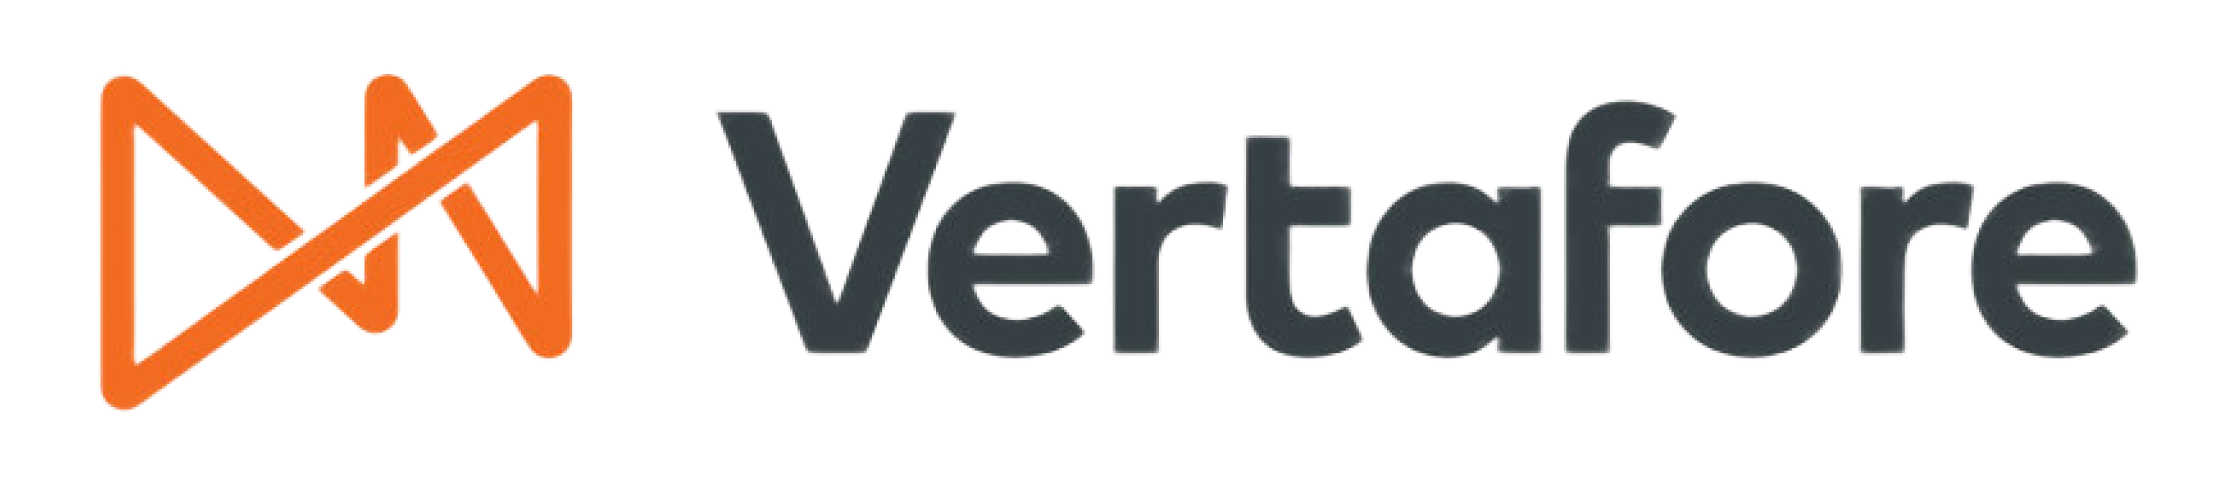 Vertafore insurance software logo